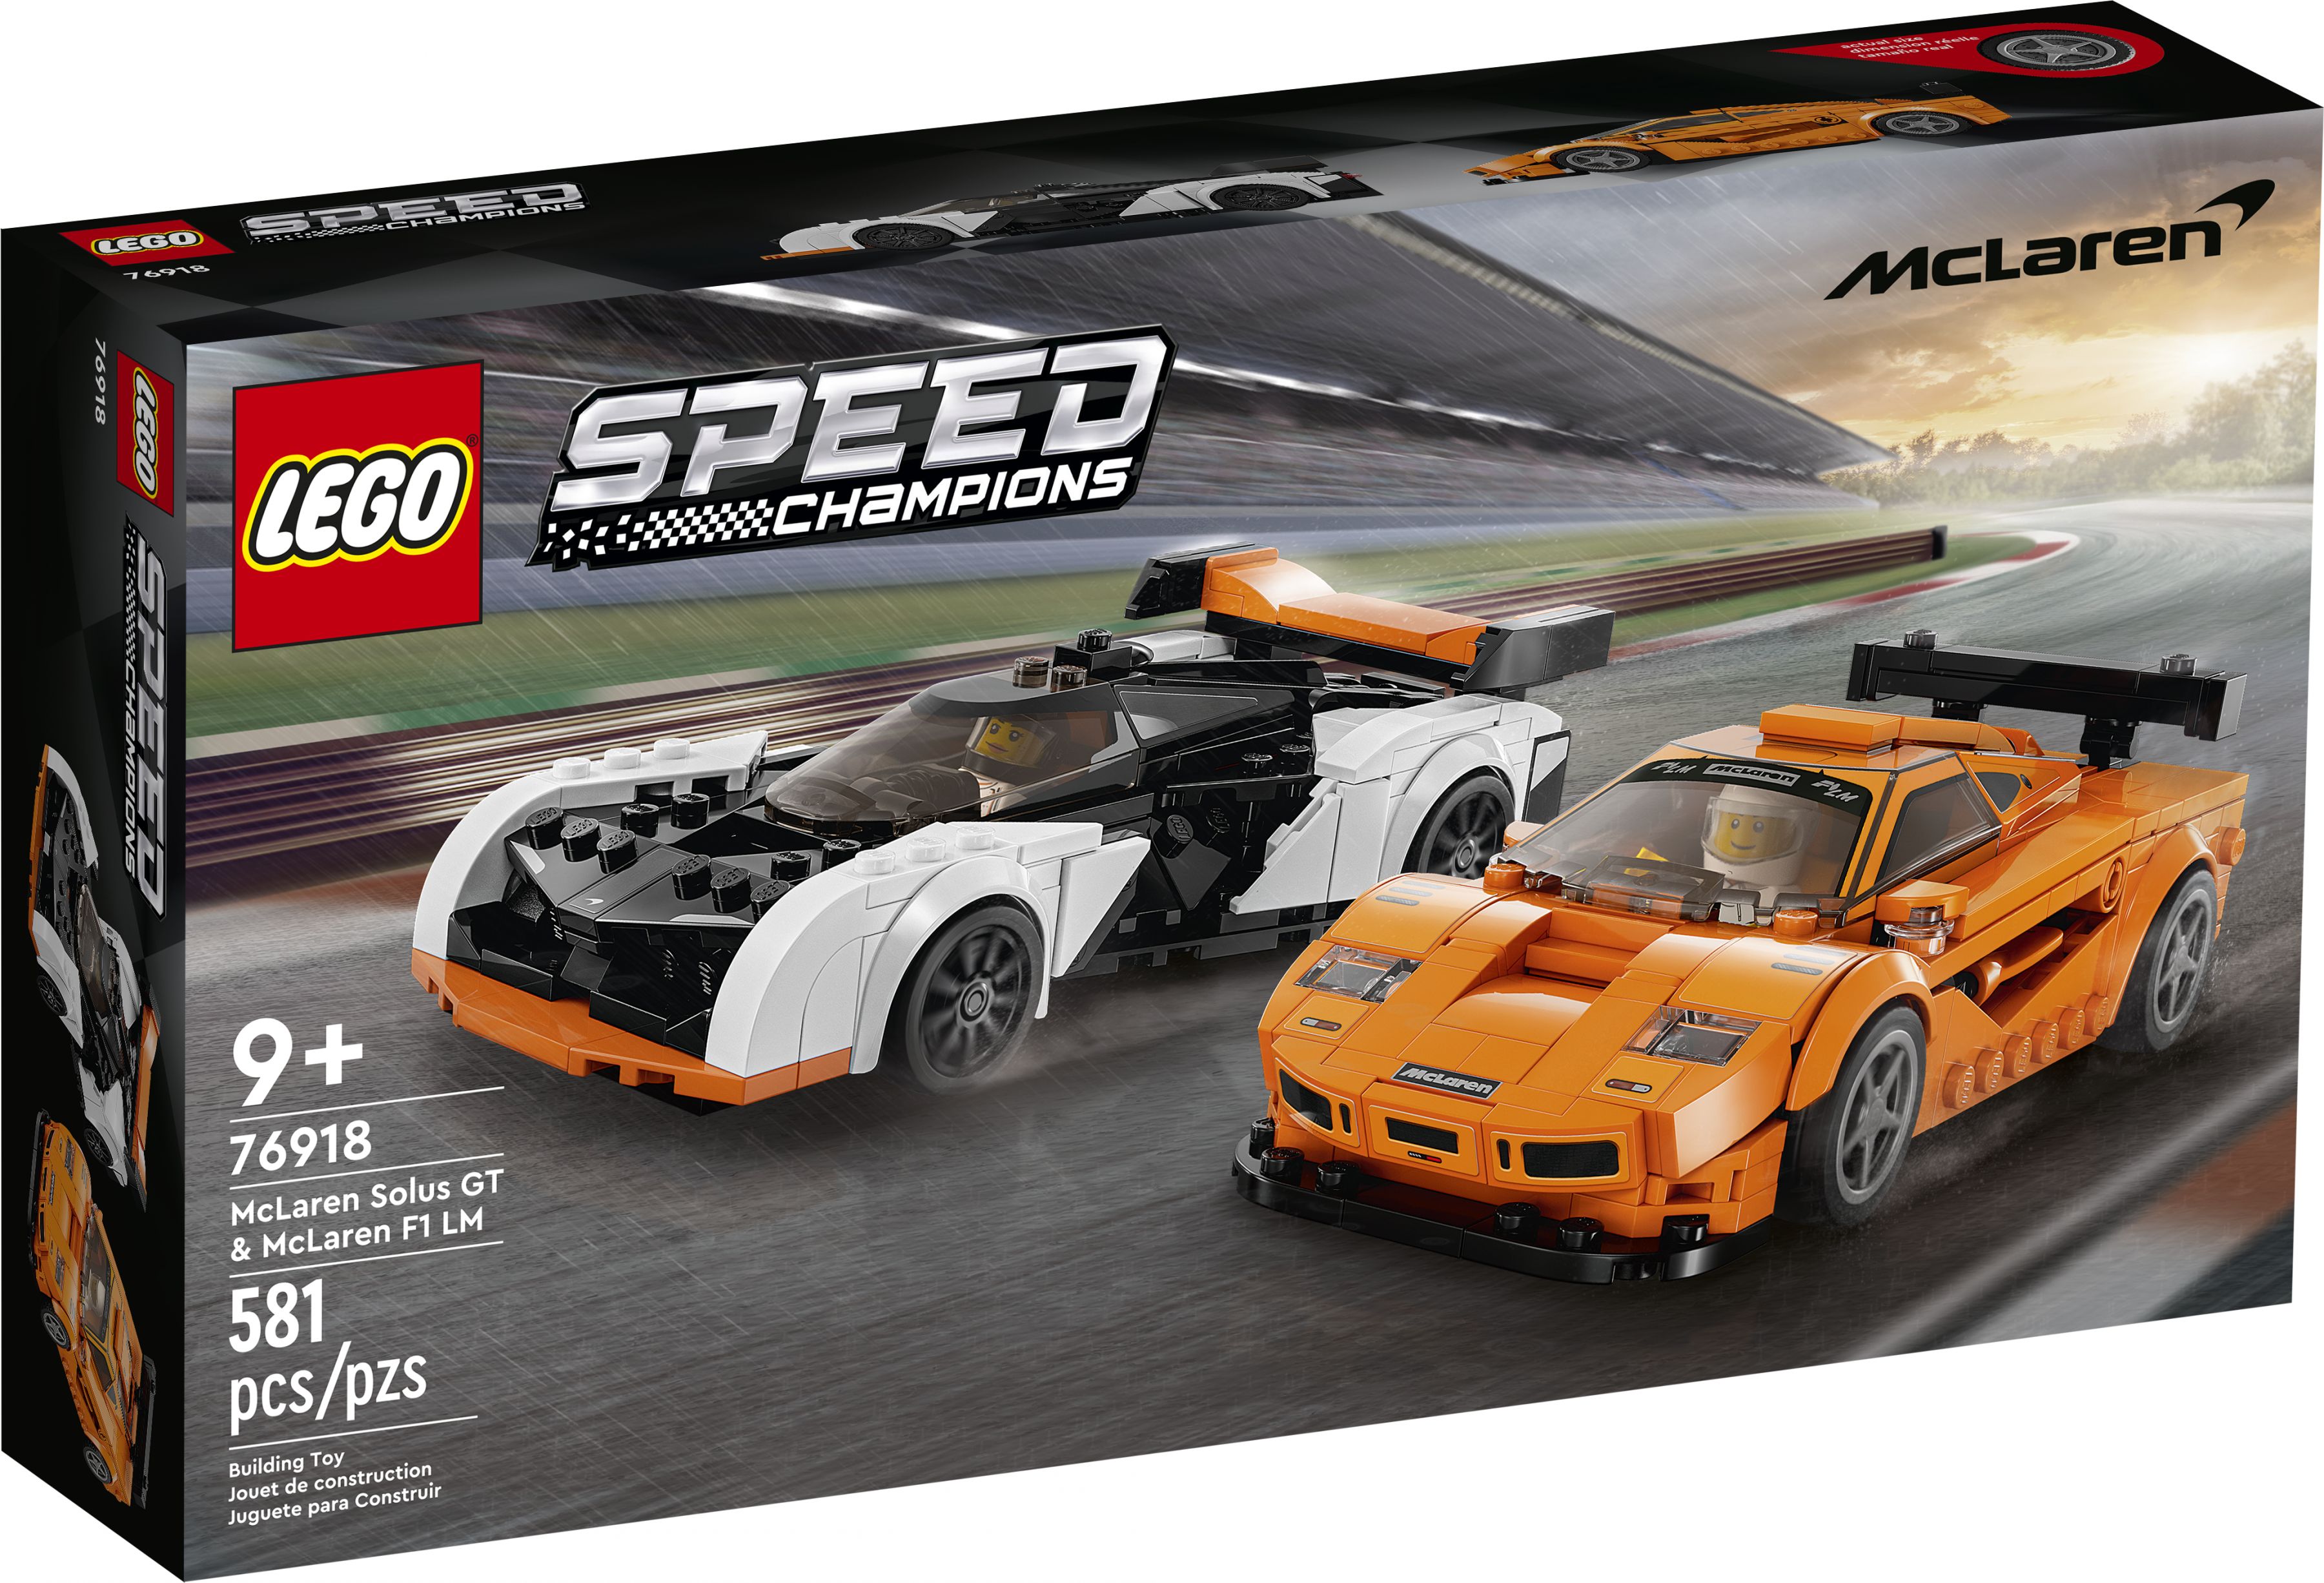 LEGO Speed Champions 76918 McLaren Solus GT & McLaren F1 LM LEGO_76918_Box1_v39.jpg